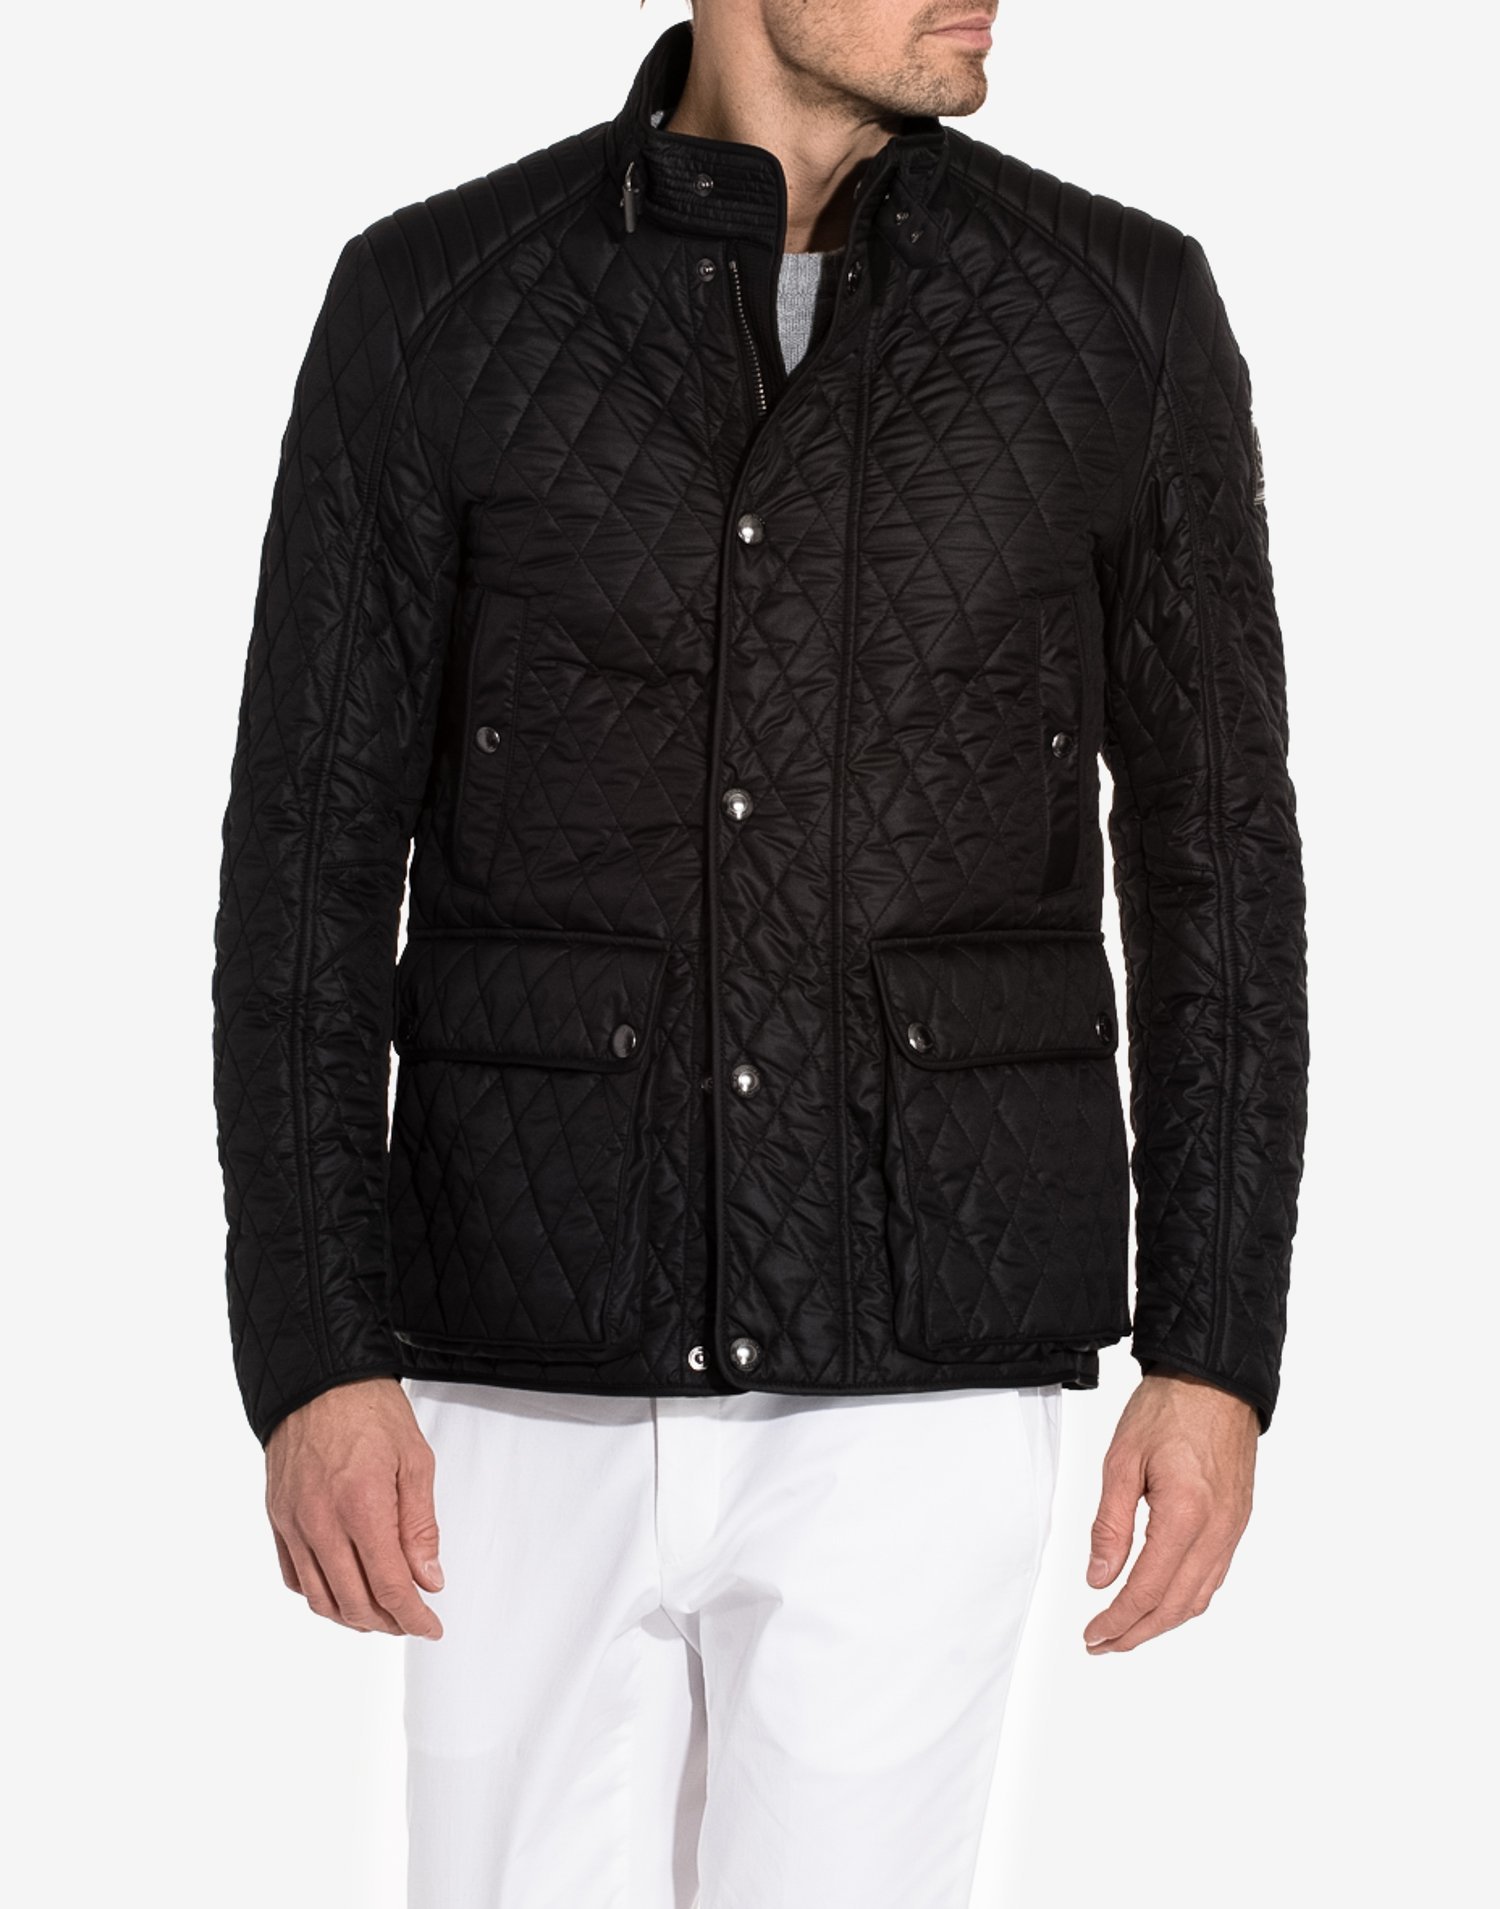 New Pathfield Jacket - Belstaff - Black - Jackets - Clothing - Men ...